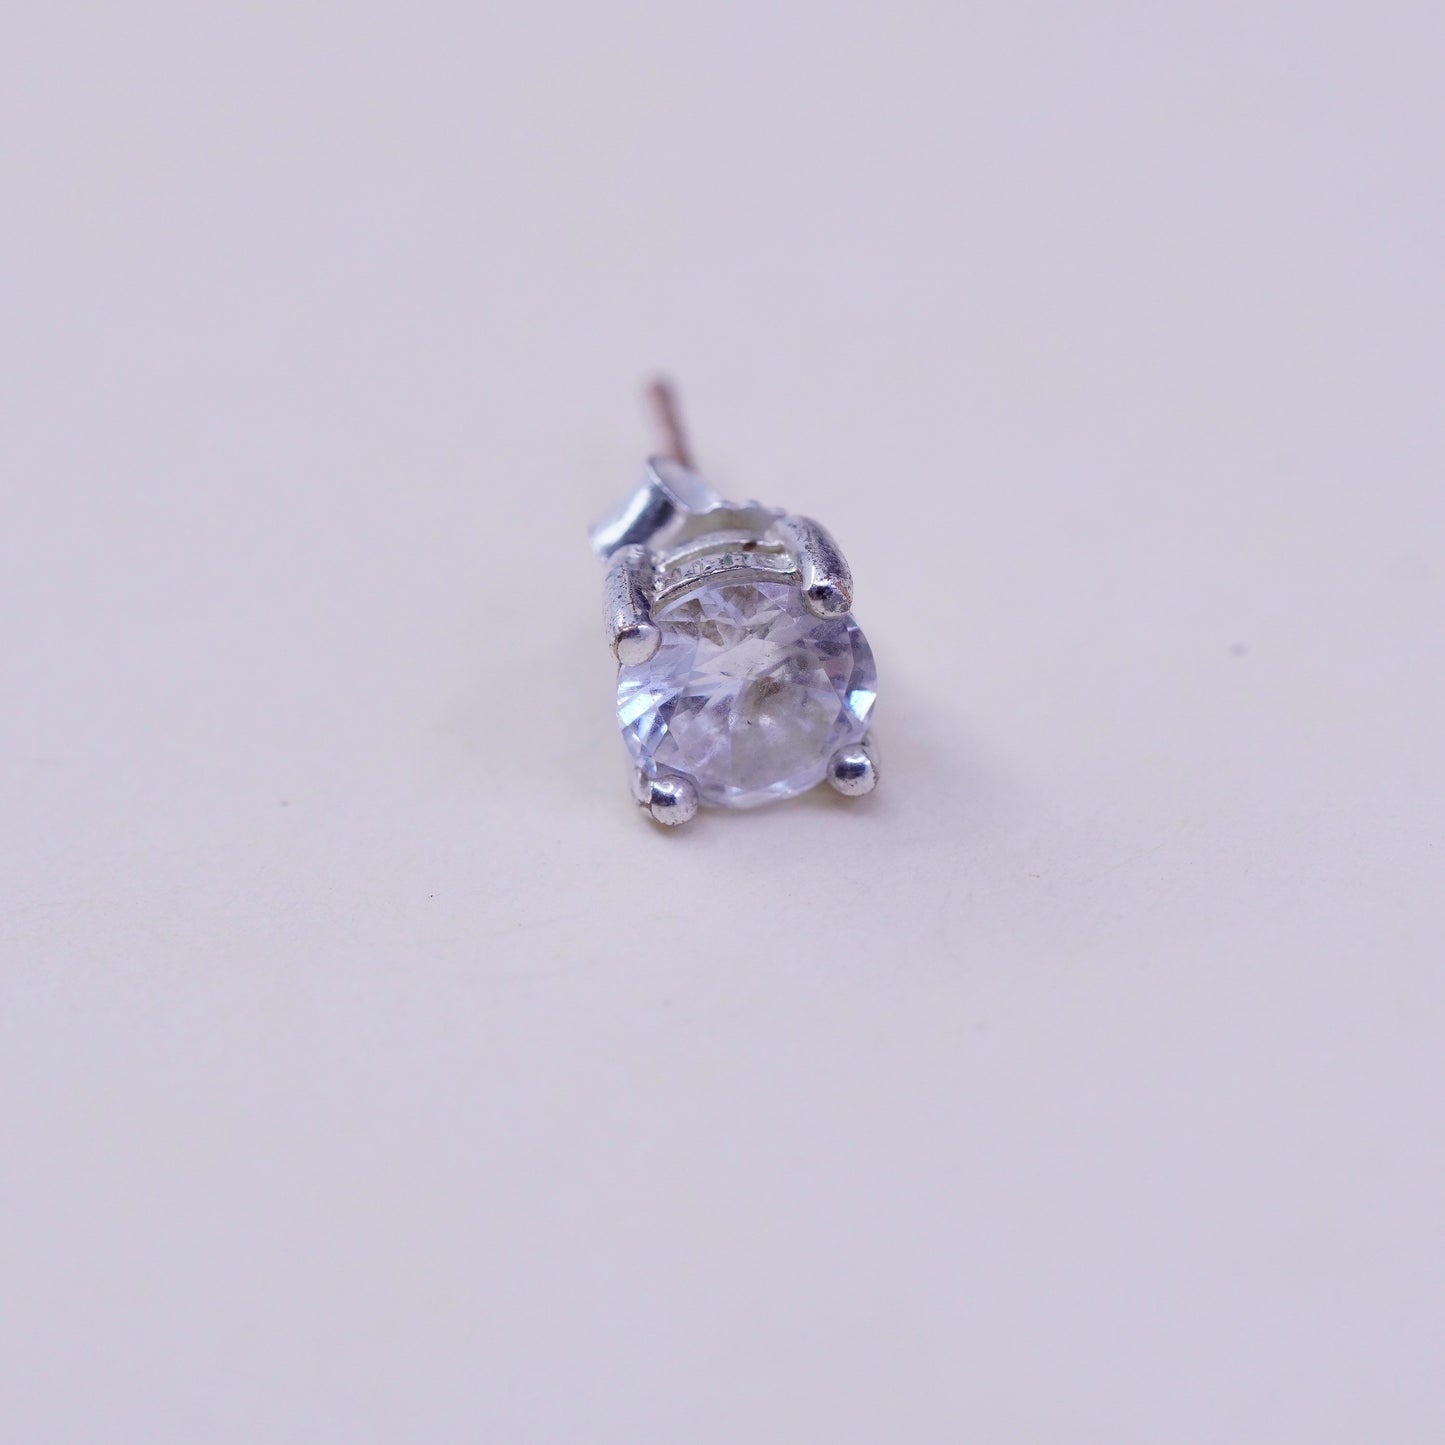 4mm, Vintage sterling silver genuine clear crystal studs, fashion minimalist earrings